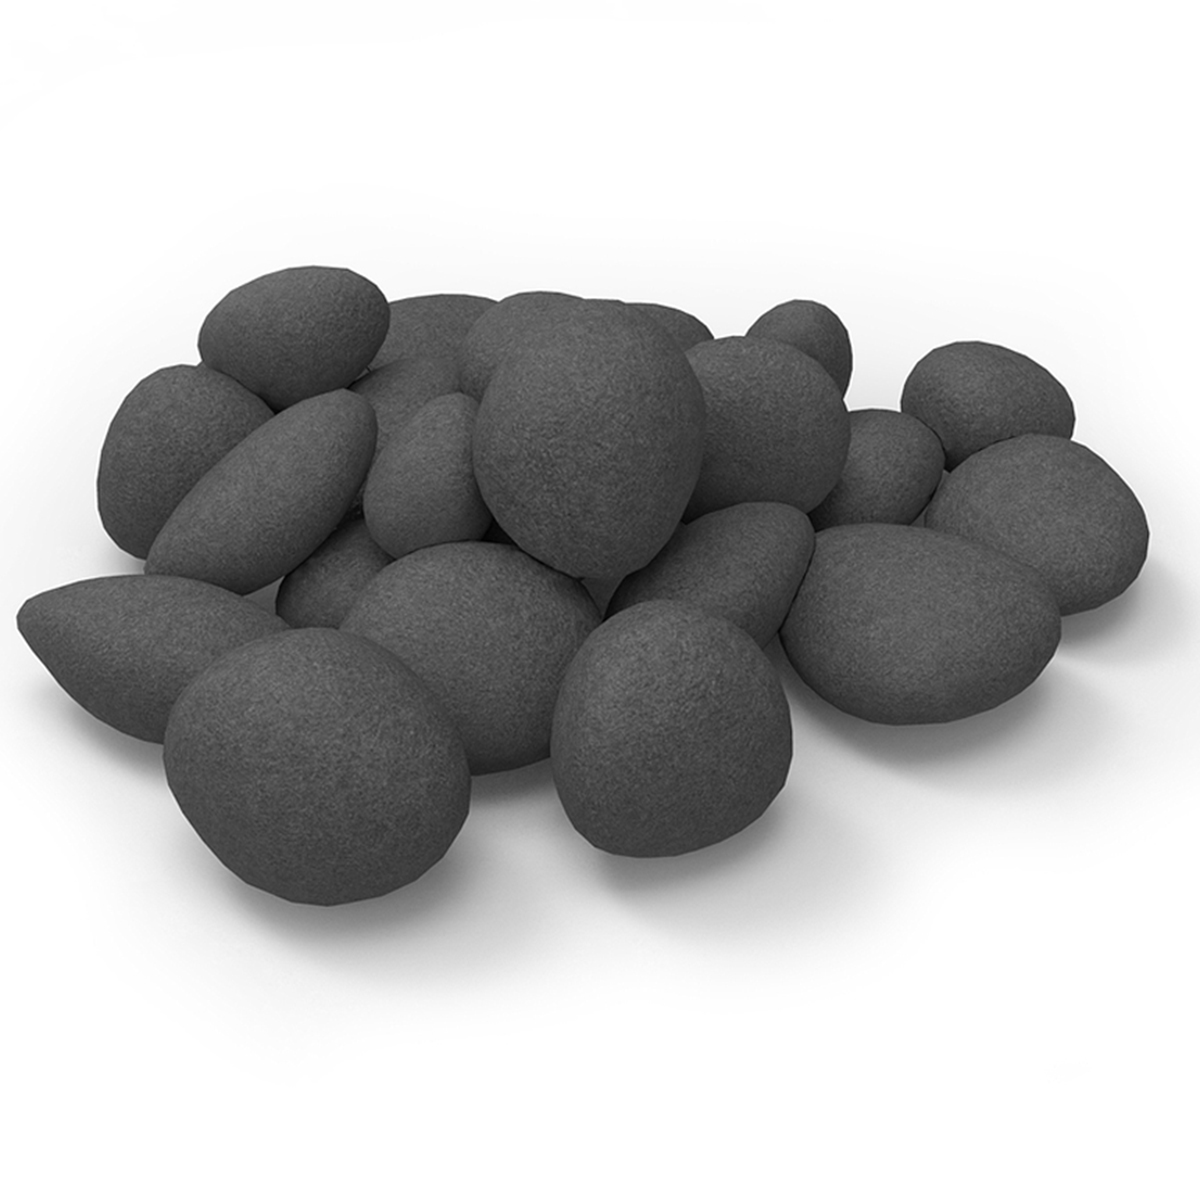 Rfa1000bk-gl Light Weight Ceramic Fiber Gas Ethanol Electric Fireplace Pebbles In Black - Set Of 24